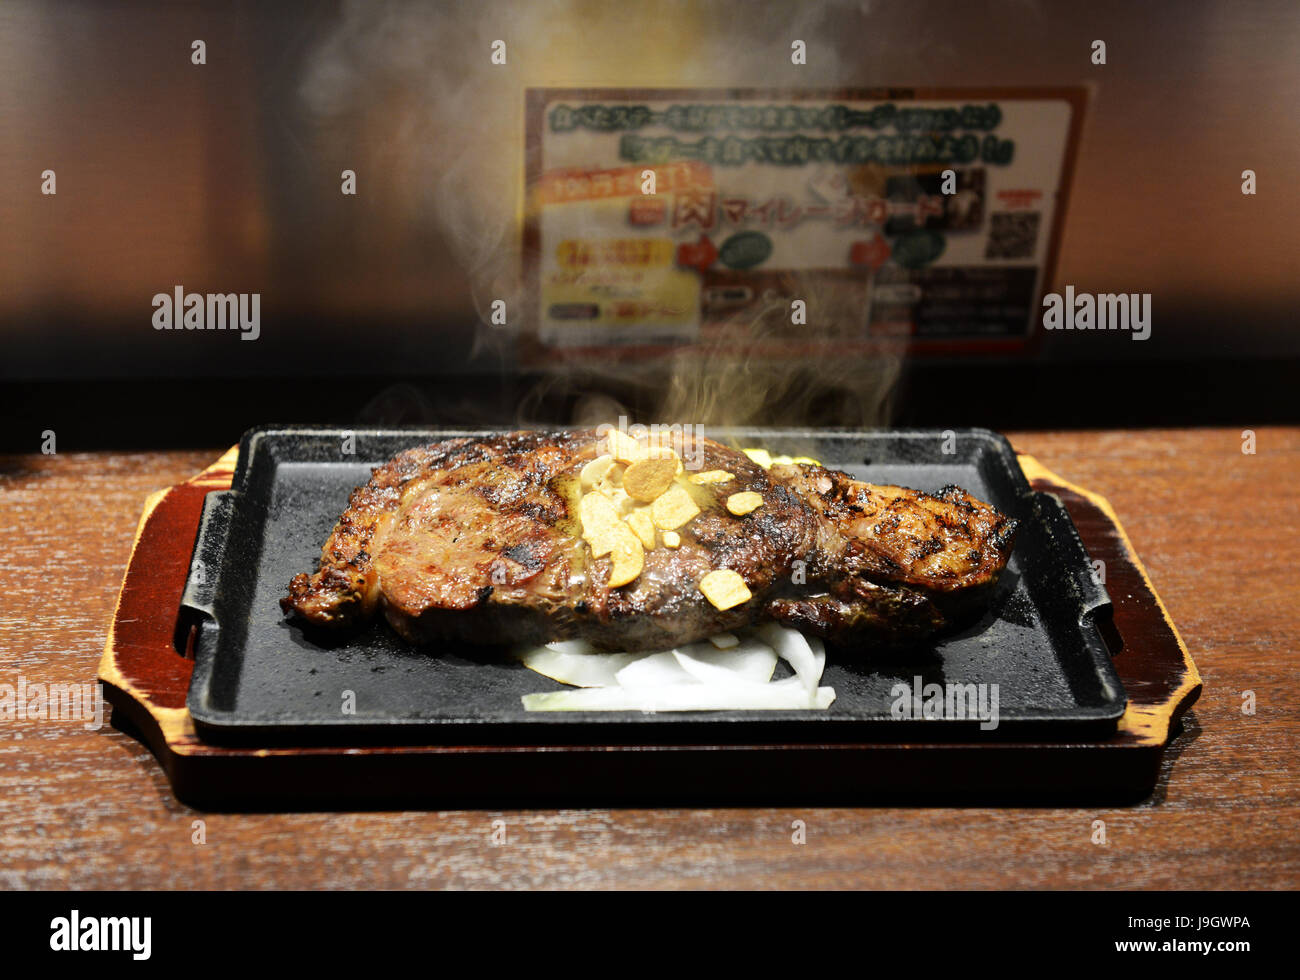 https://c8.alamy.com/comp/J9GWPA/a-sizzling-grilled-steak-served-in-a-japanese-steakhouse-in-tokyo-J9GWPA.jpg